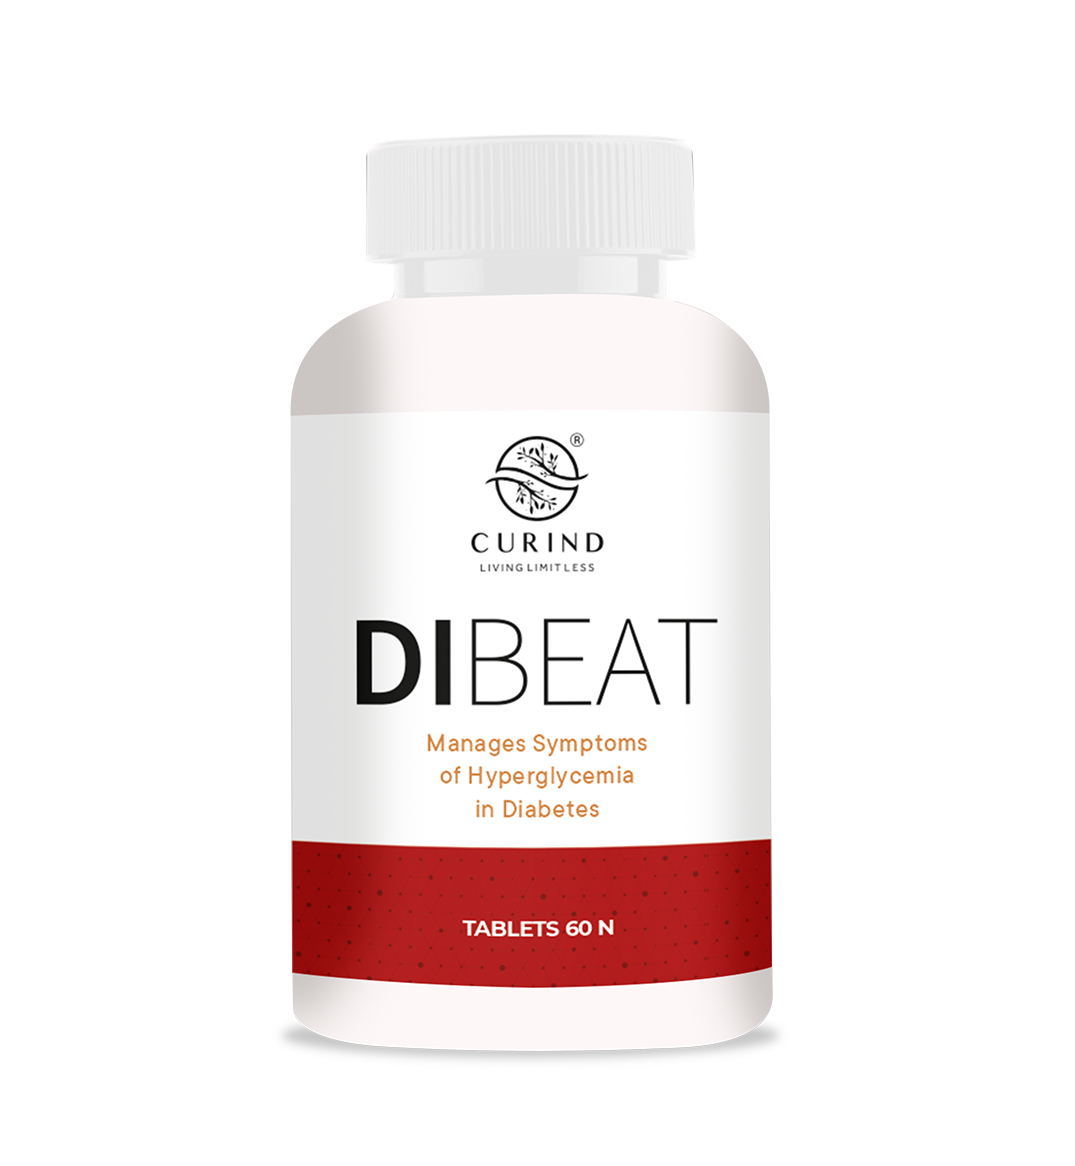 Di-BEAT tablets- best medicine for diabetes